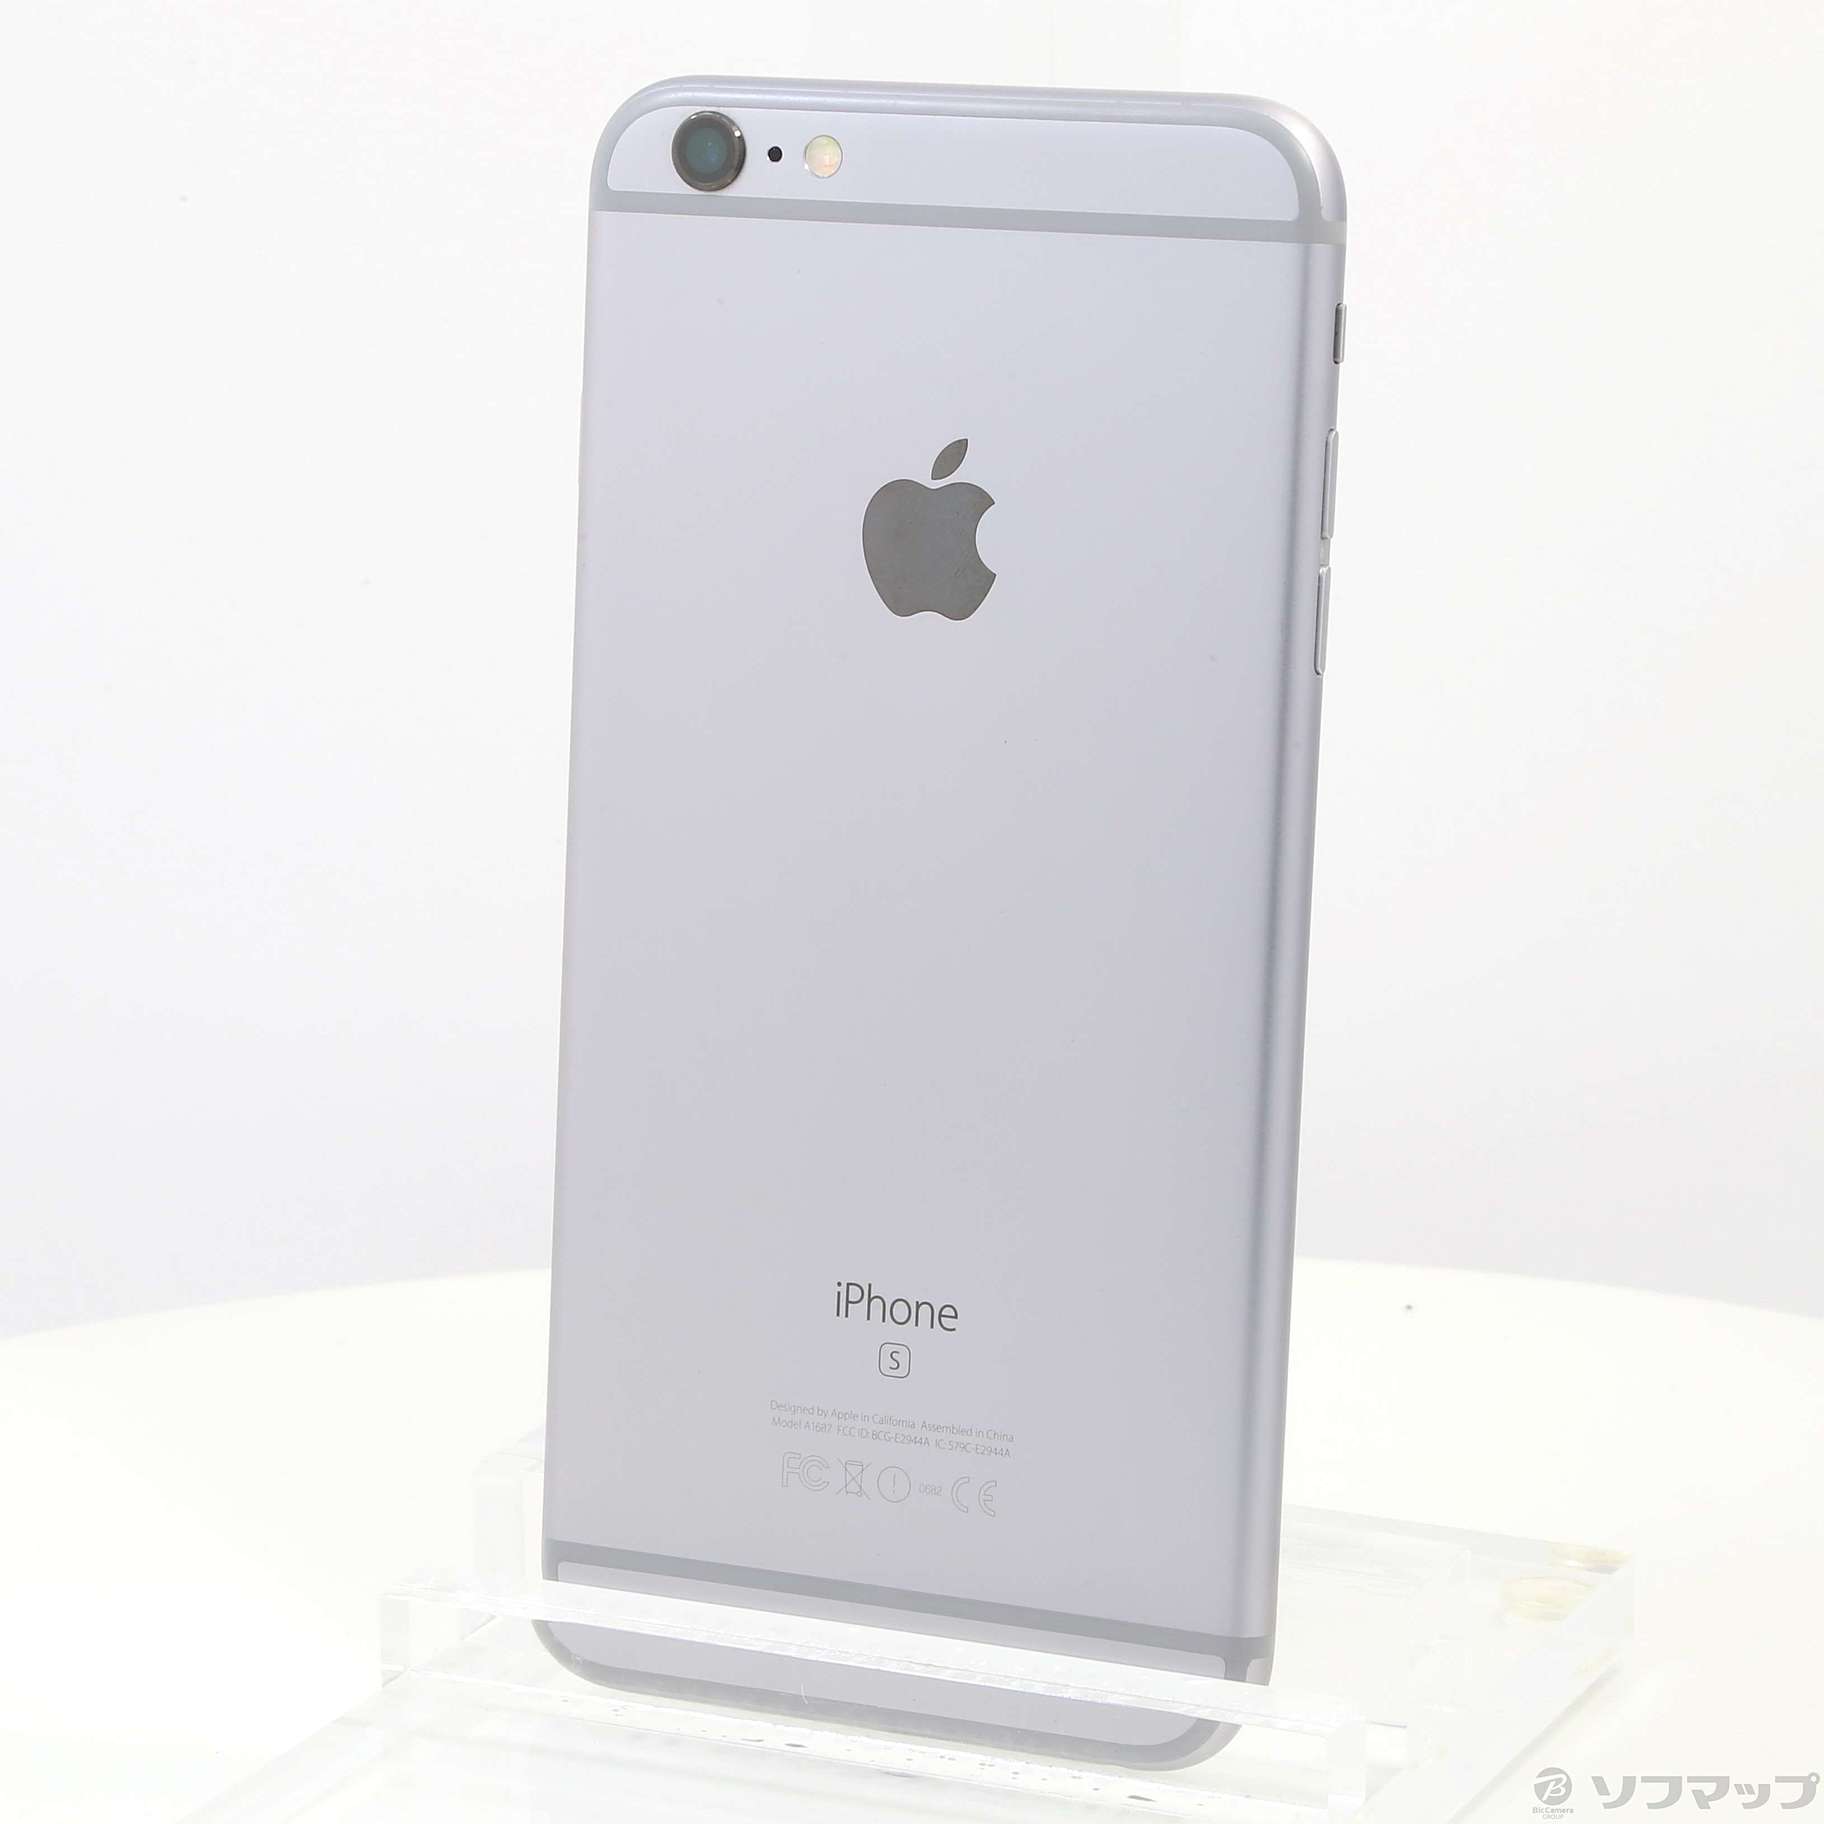 iPhone 6S Plus 128GB Space Gray SIM Free